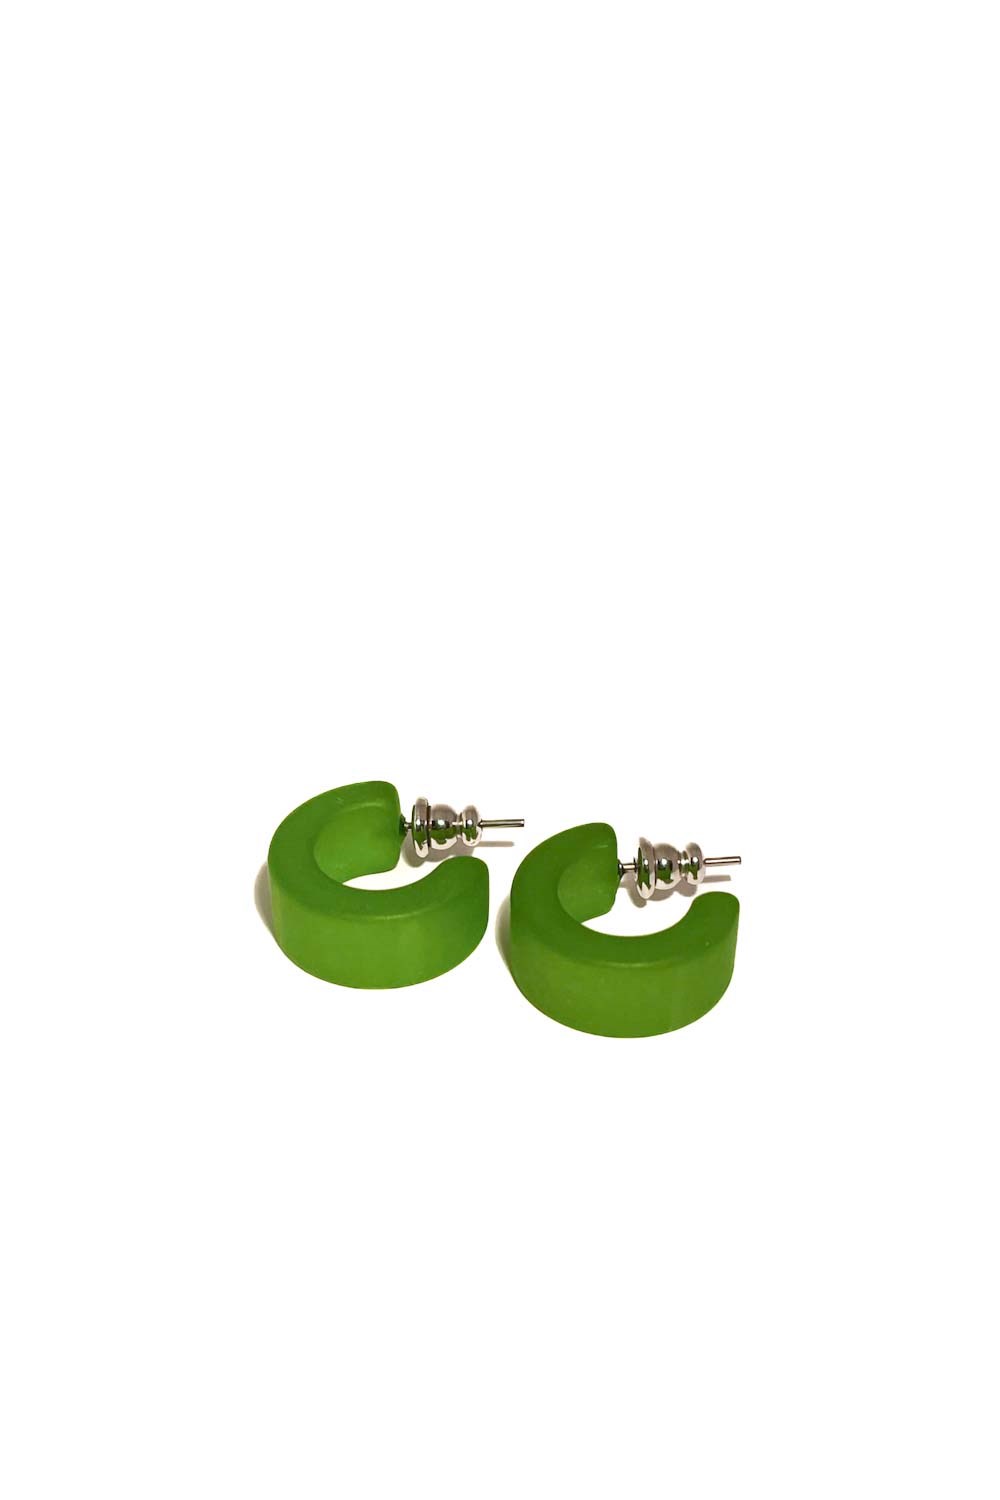 Earrings resin 60s style green